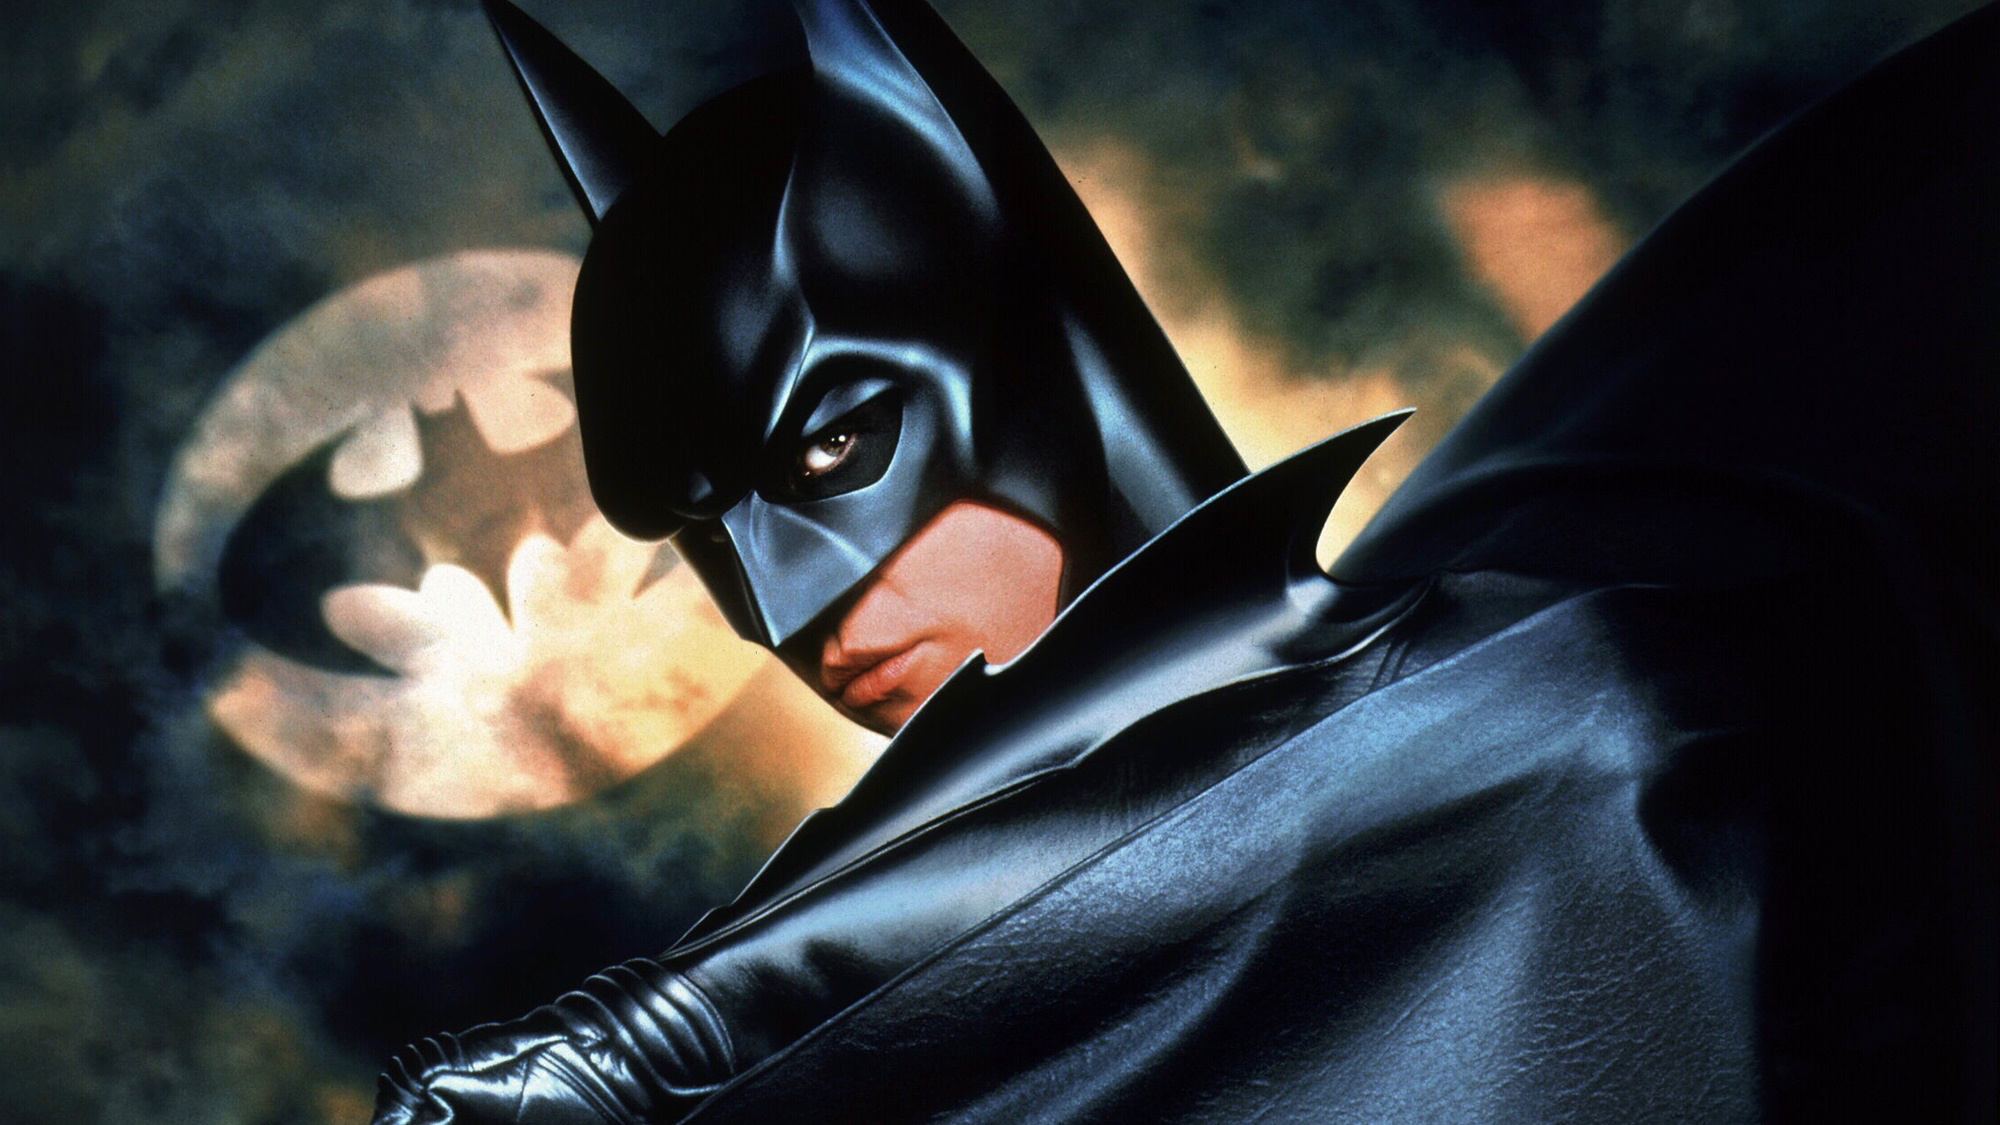 Movie Batman Forever HD Wallpaper | Background Image